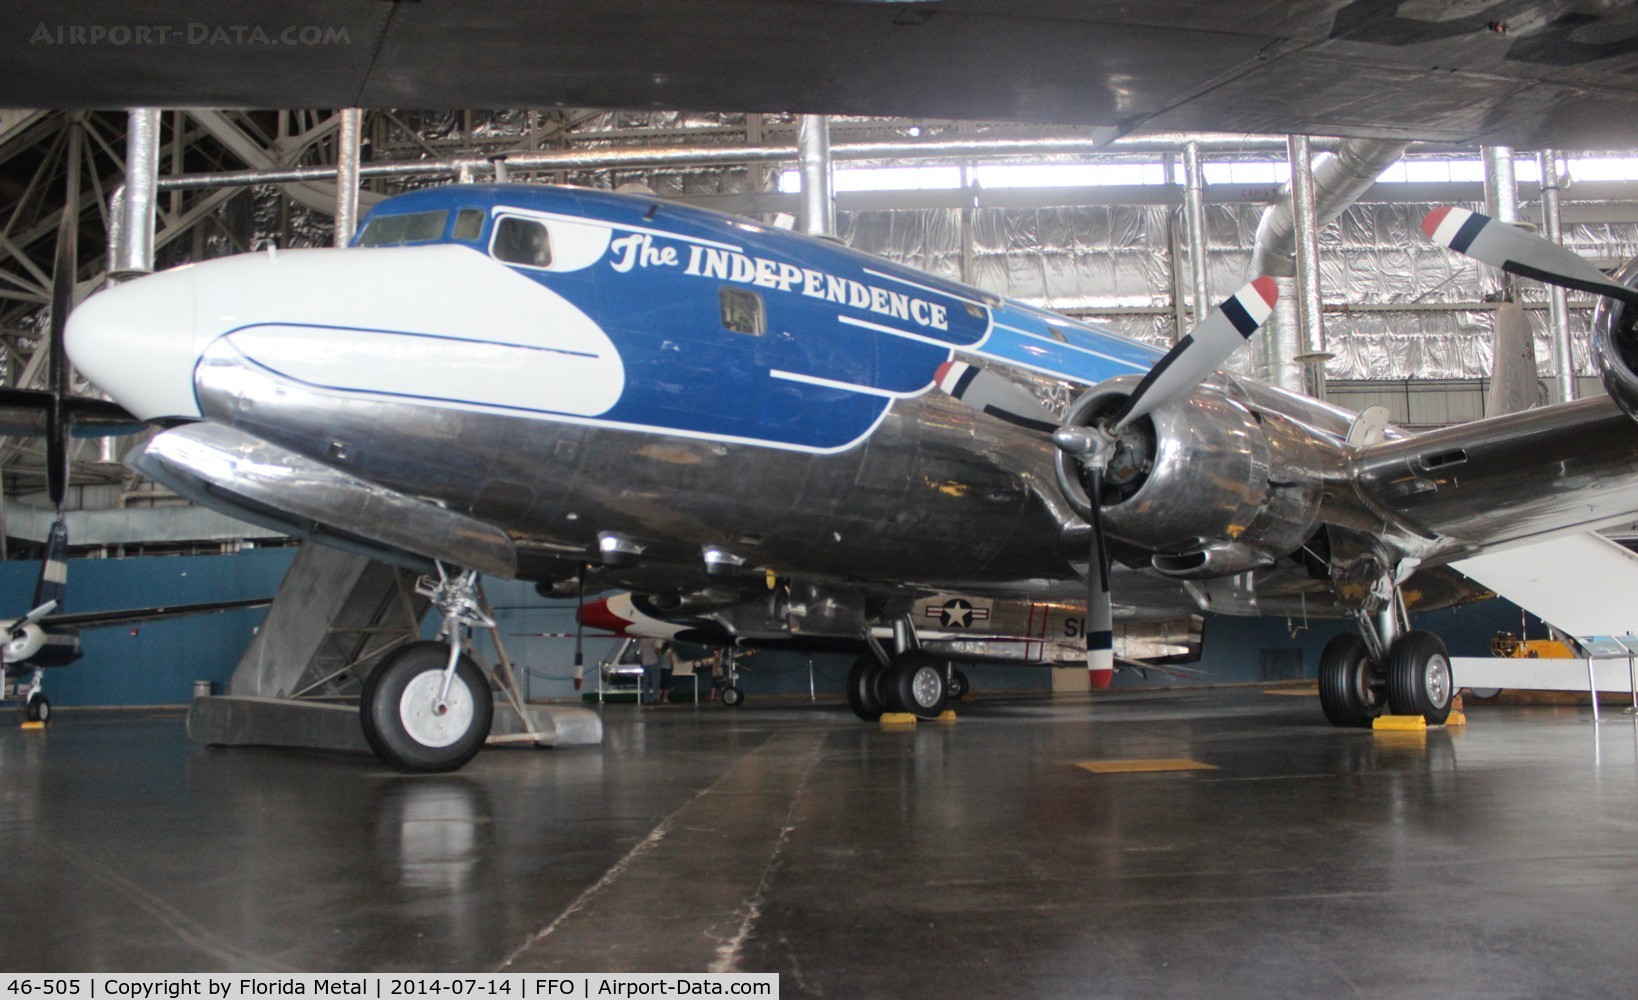 46-505, 1947 Douglas VC-118A Liftmaster C/N 42881, VC-118 Liftmaster used by President Truman